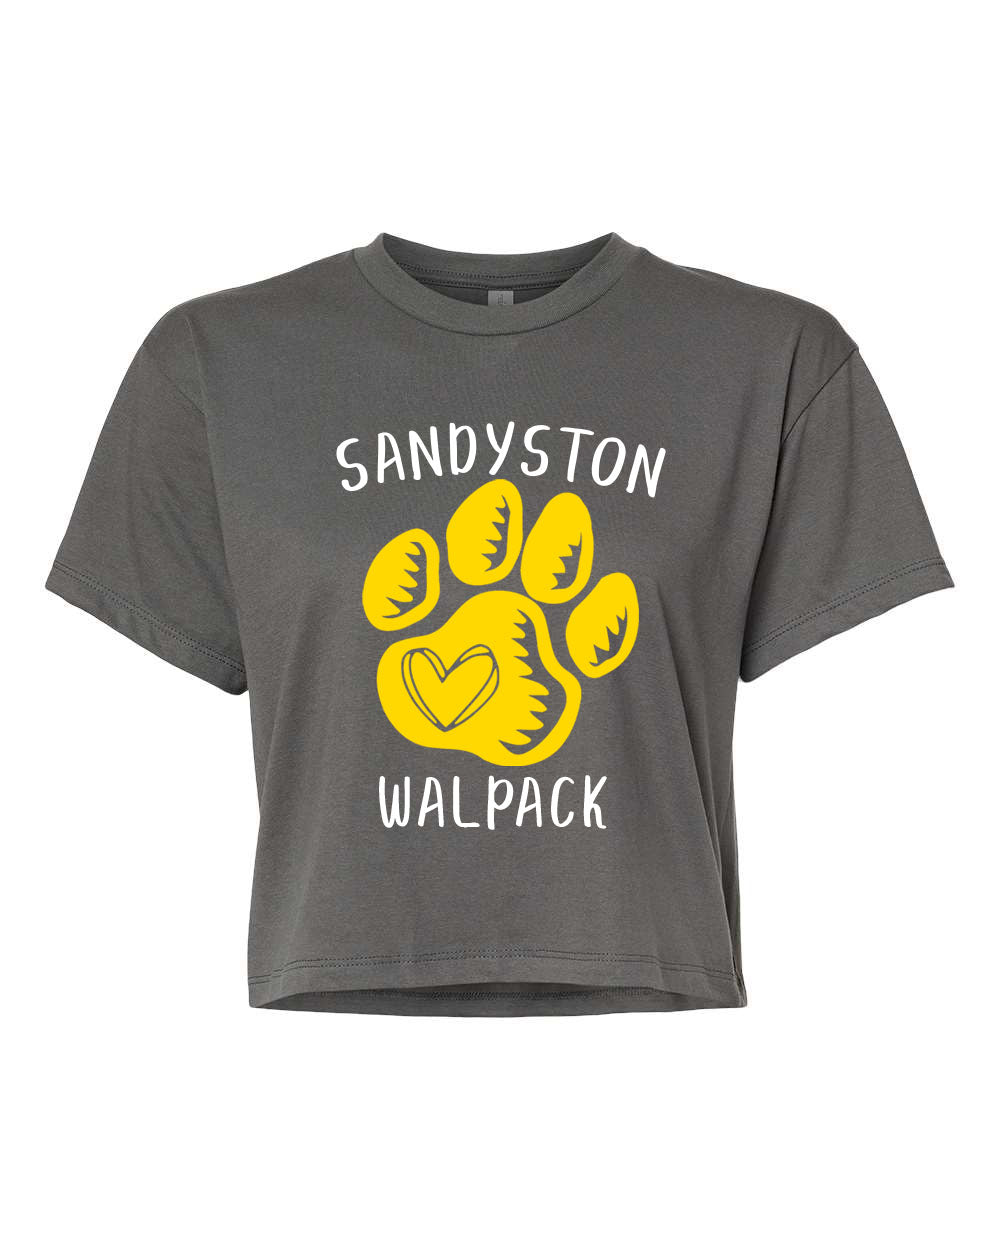 Sandyston Walpack Design 1 Crop Top